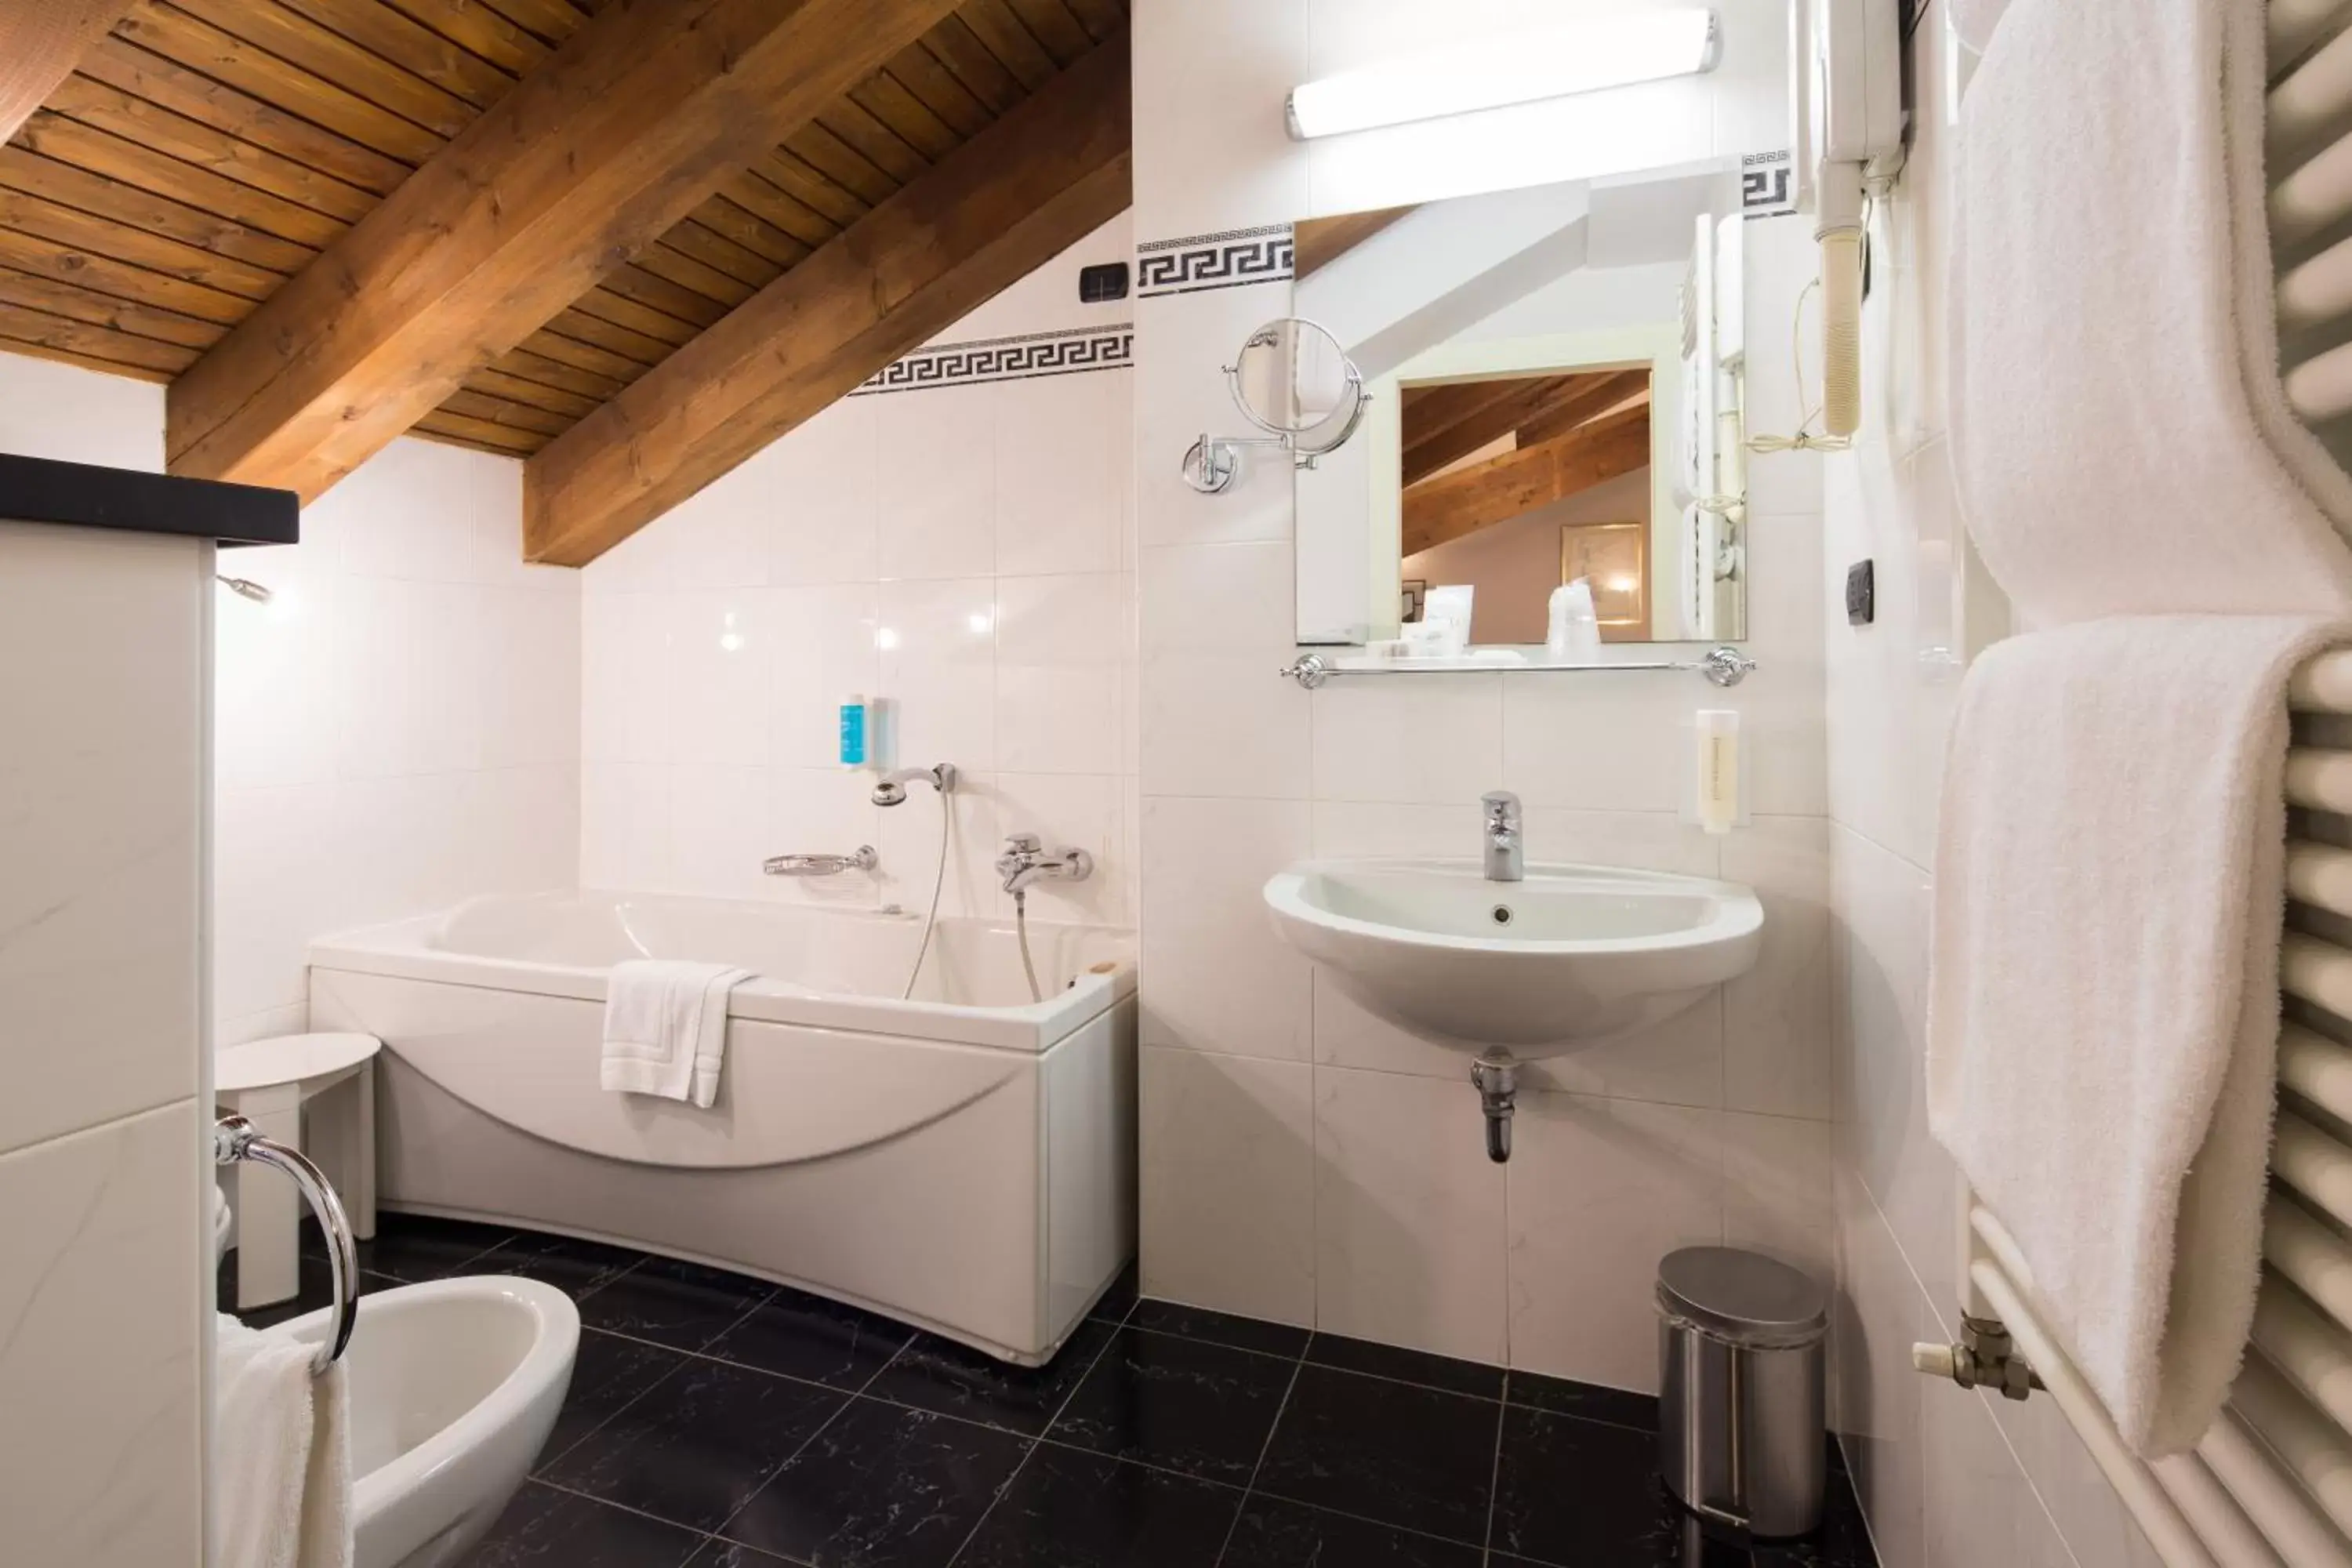 Photo of the whole room, Bathroom in Art & Hotel Aeroporto